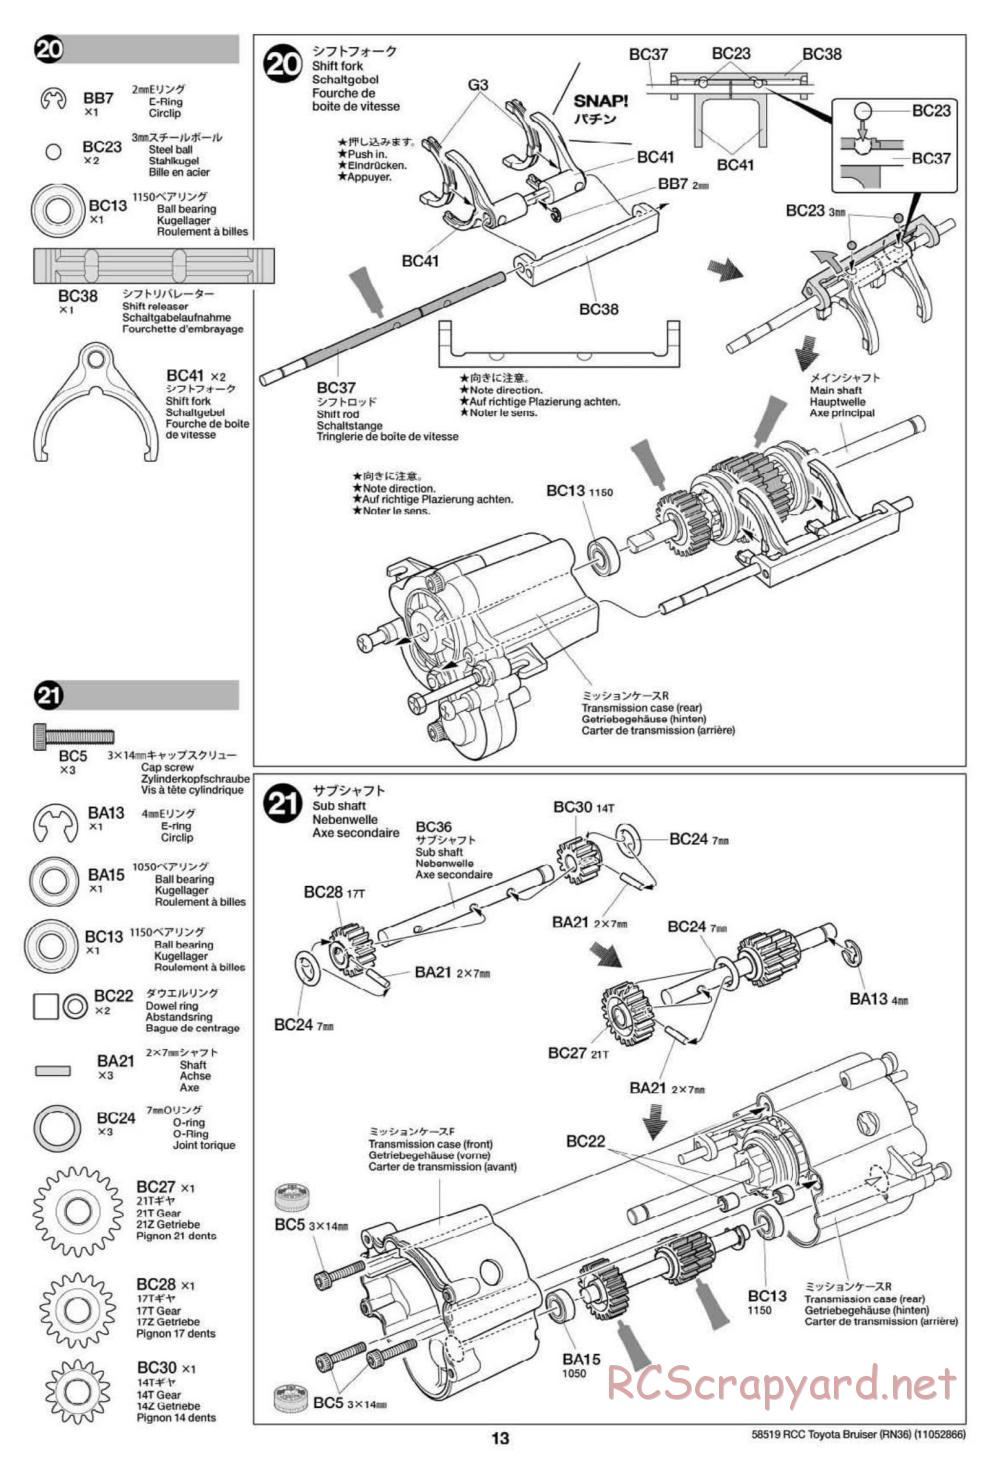 Tamiya - Toyota 4x4 Pick Up Bruiser Chassis - Manual - Page 13